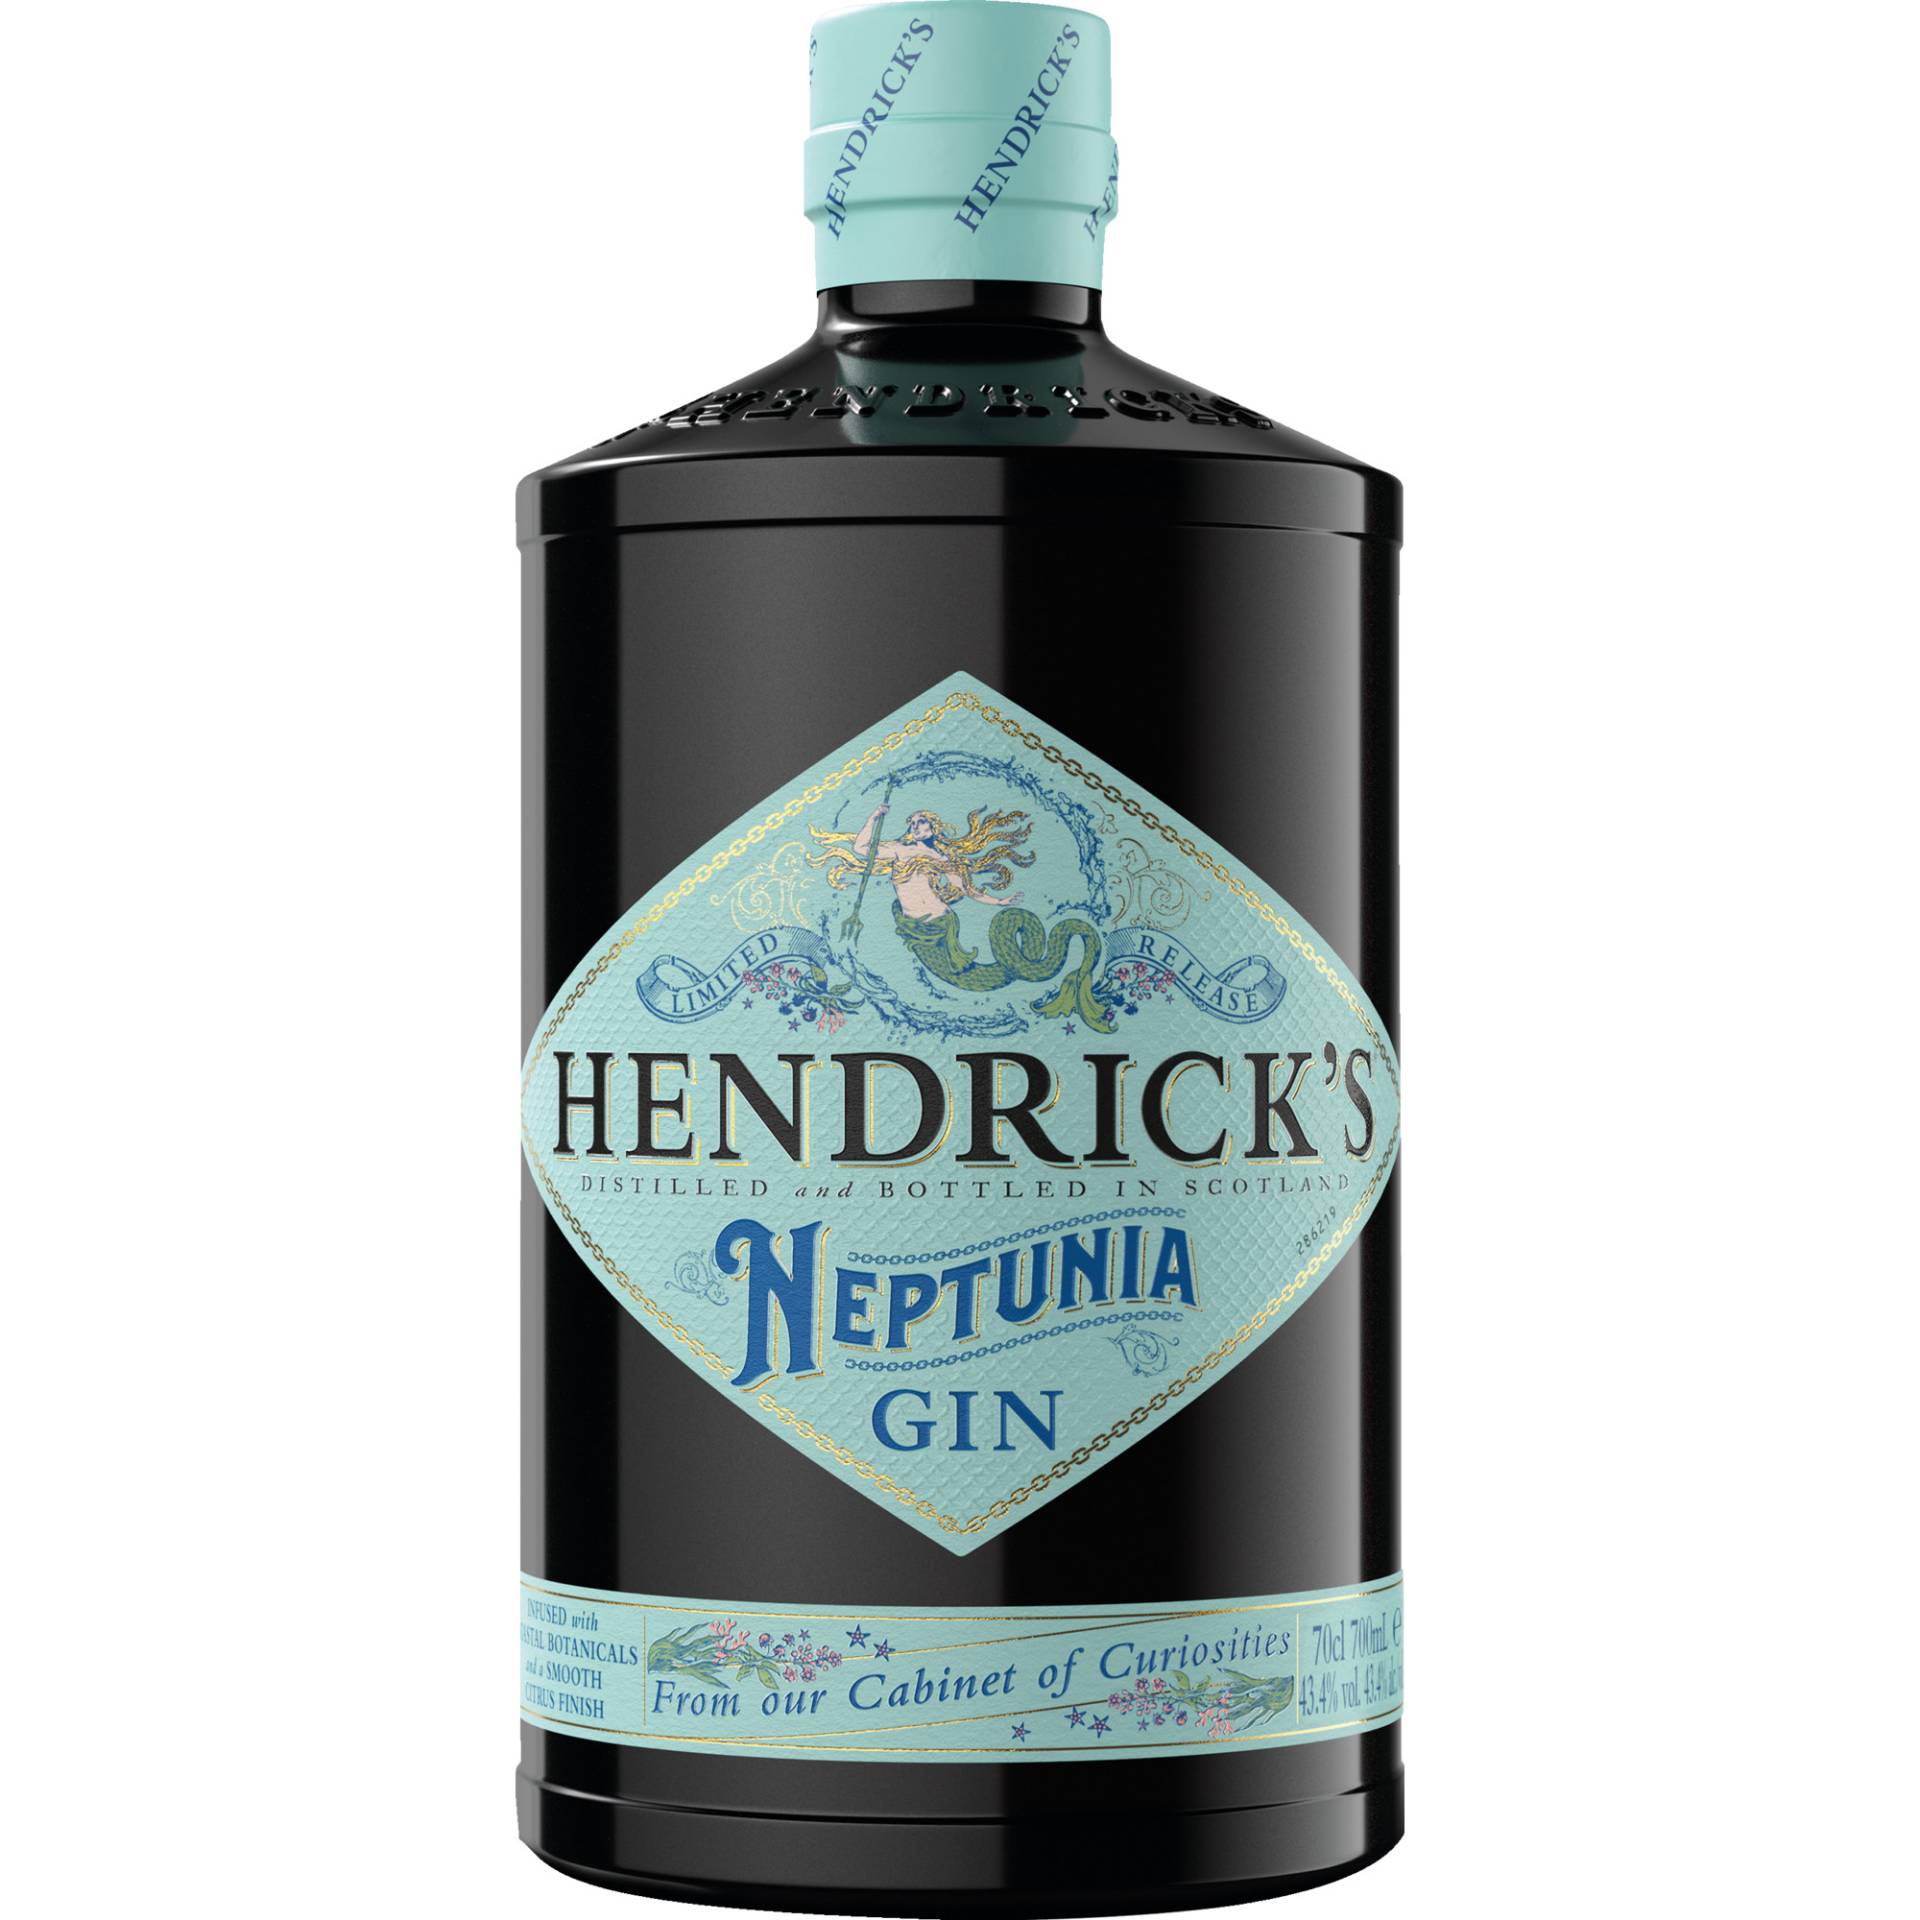 Hendrick's Neptunia Gin Limited Edition, 43,4 %, 0,7 L, Schottland, Spirituosen von William Grant & Sons Global Brands Ltd., Tullamore, Ireland